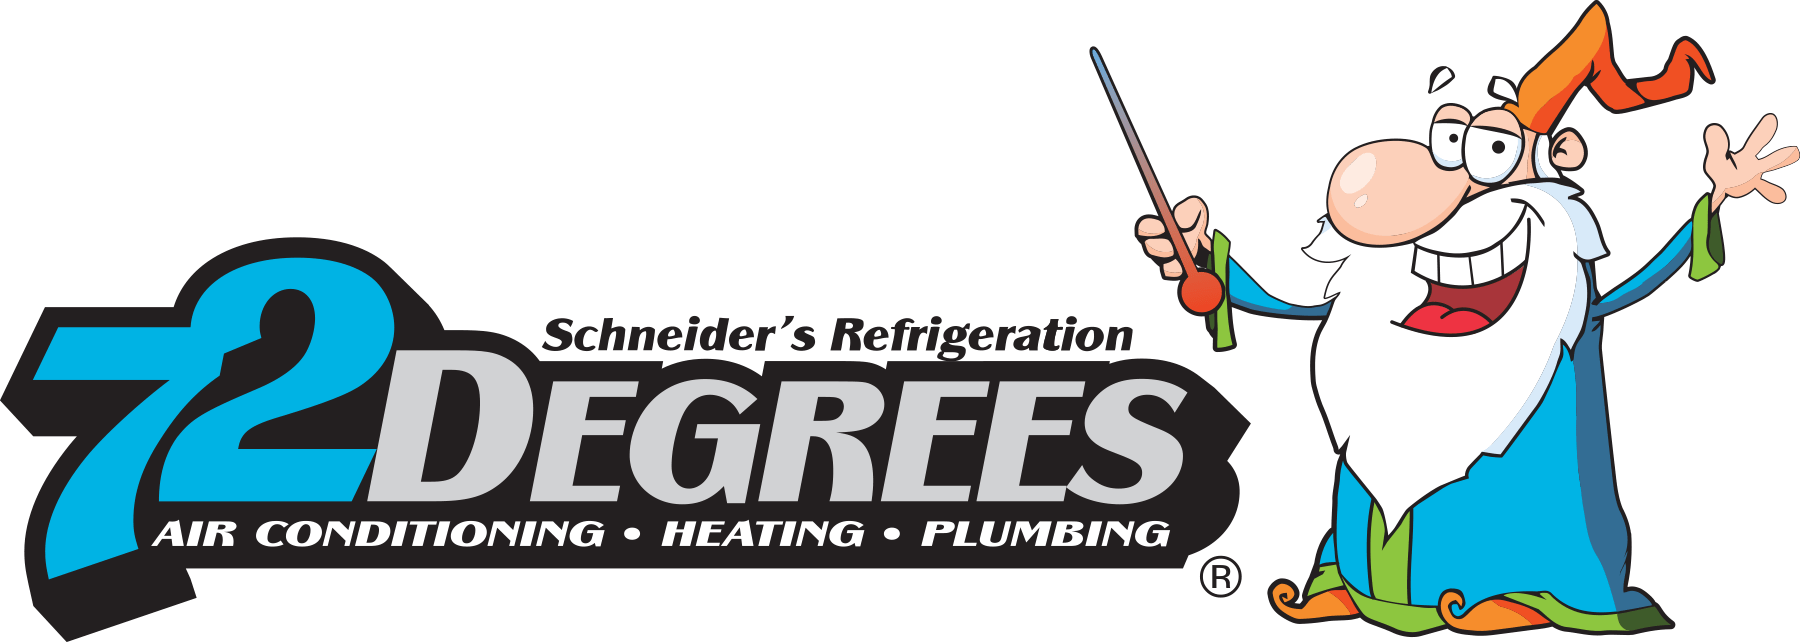 Furnace Repair Service Boerne TX | 72 Degrees Air Conditioning, Heating & Plumbing.